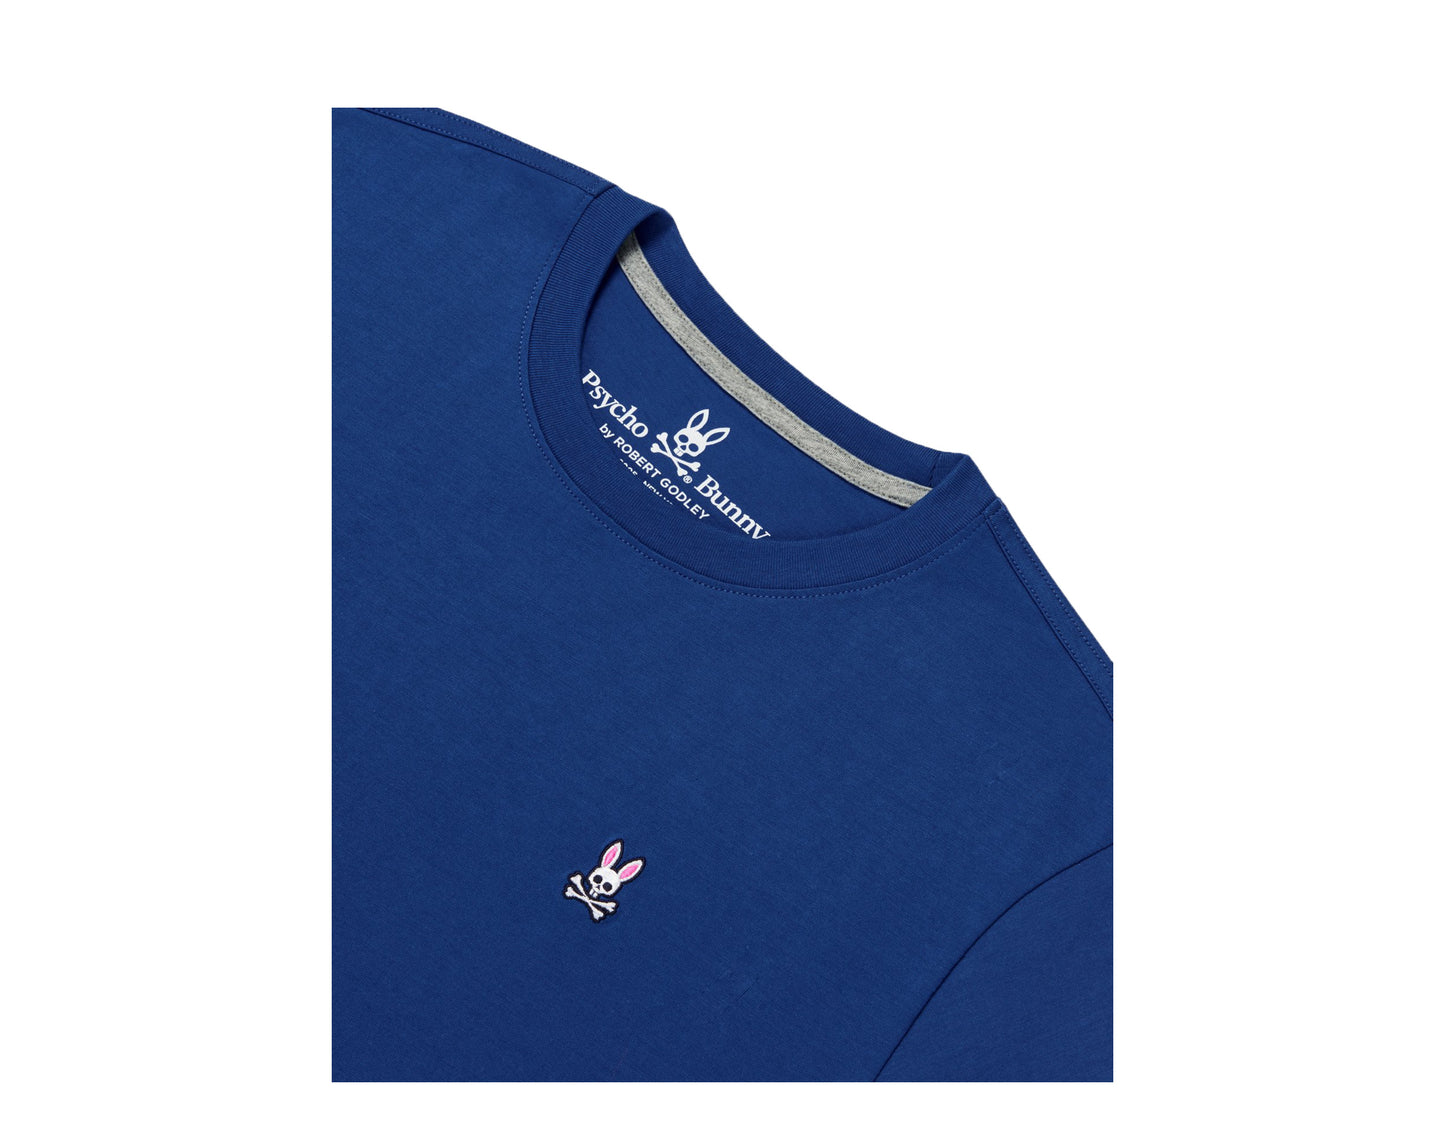 Psycho Bunny Classic Crew Neck Seaport Blue Men's Tee Shirt B6U014F1PC-SPR